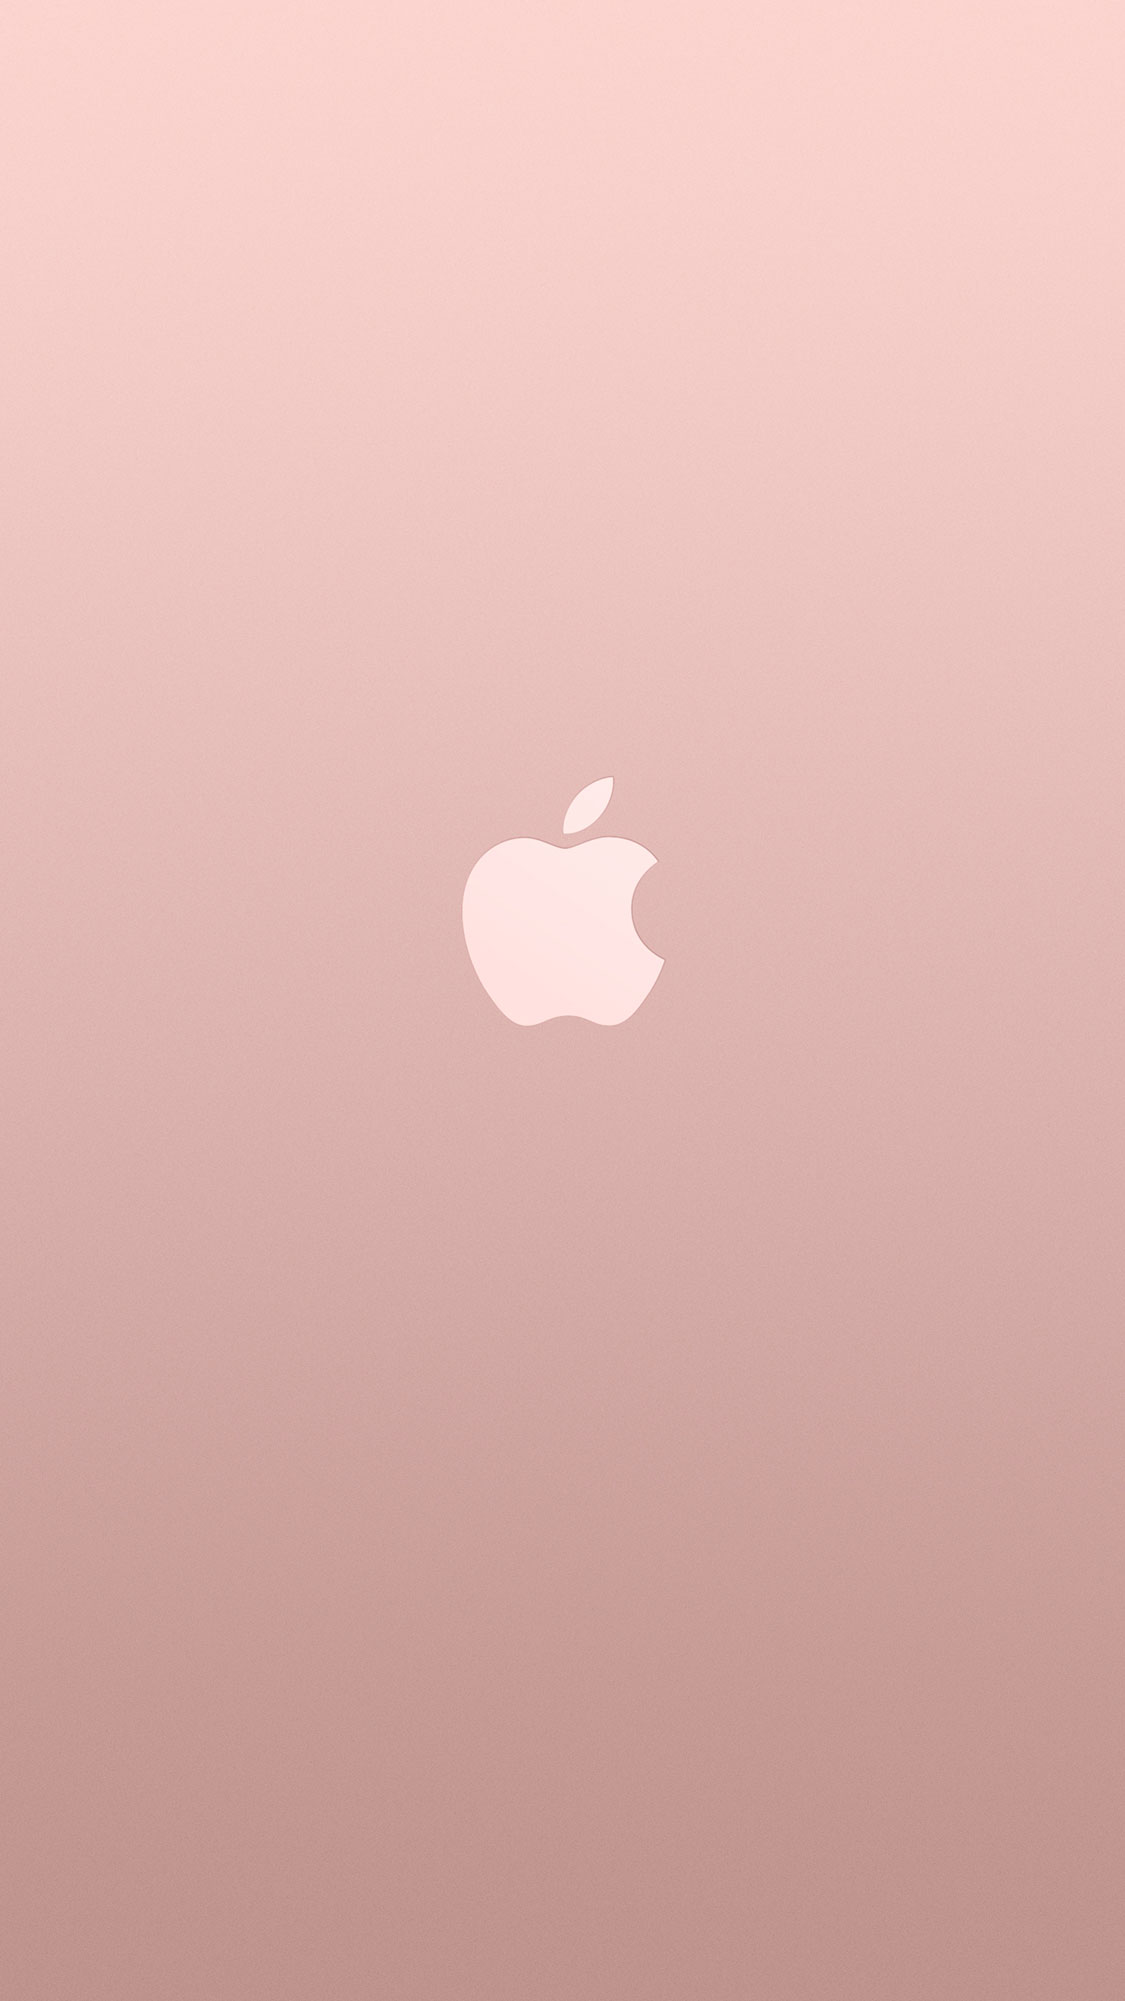 Gold Apple iPhone 6s wallpaper HDjpg 11252001 iPHONE WALLPAPERS